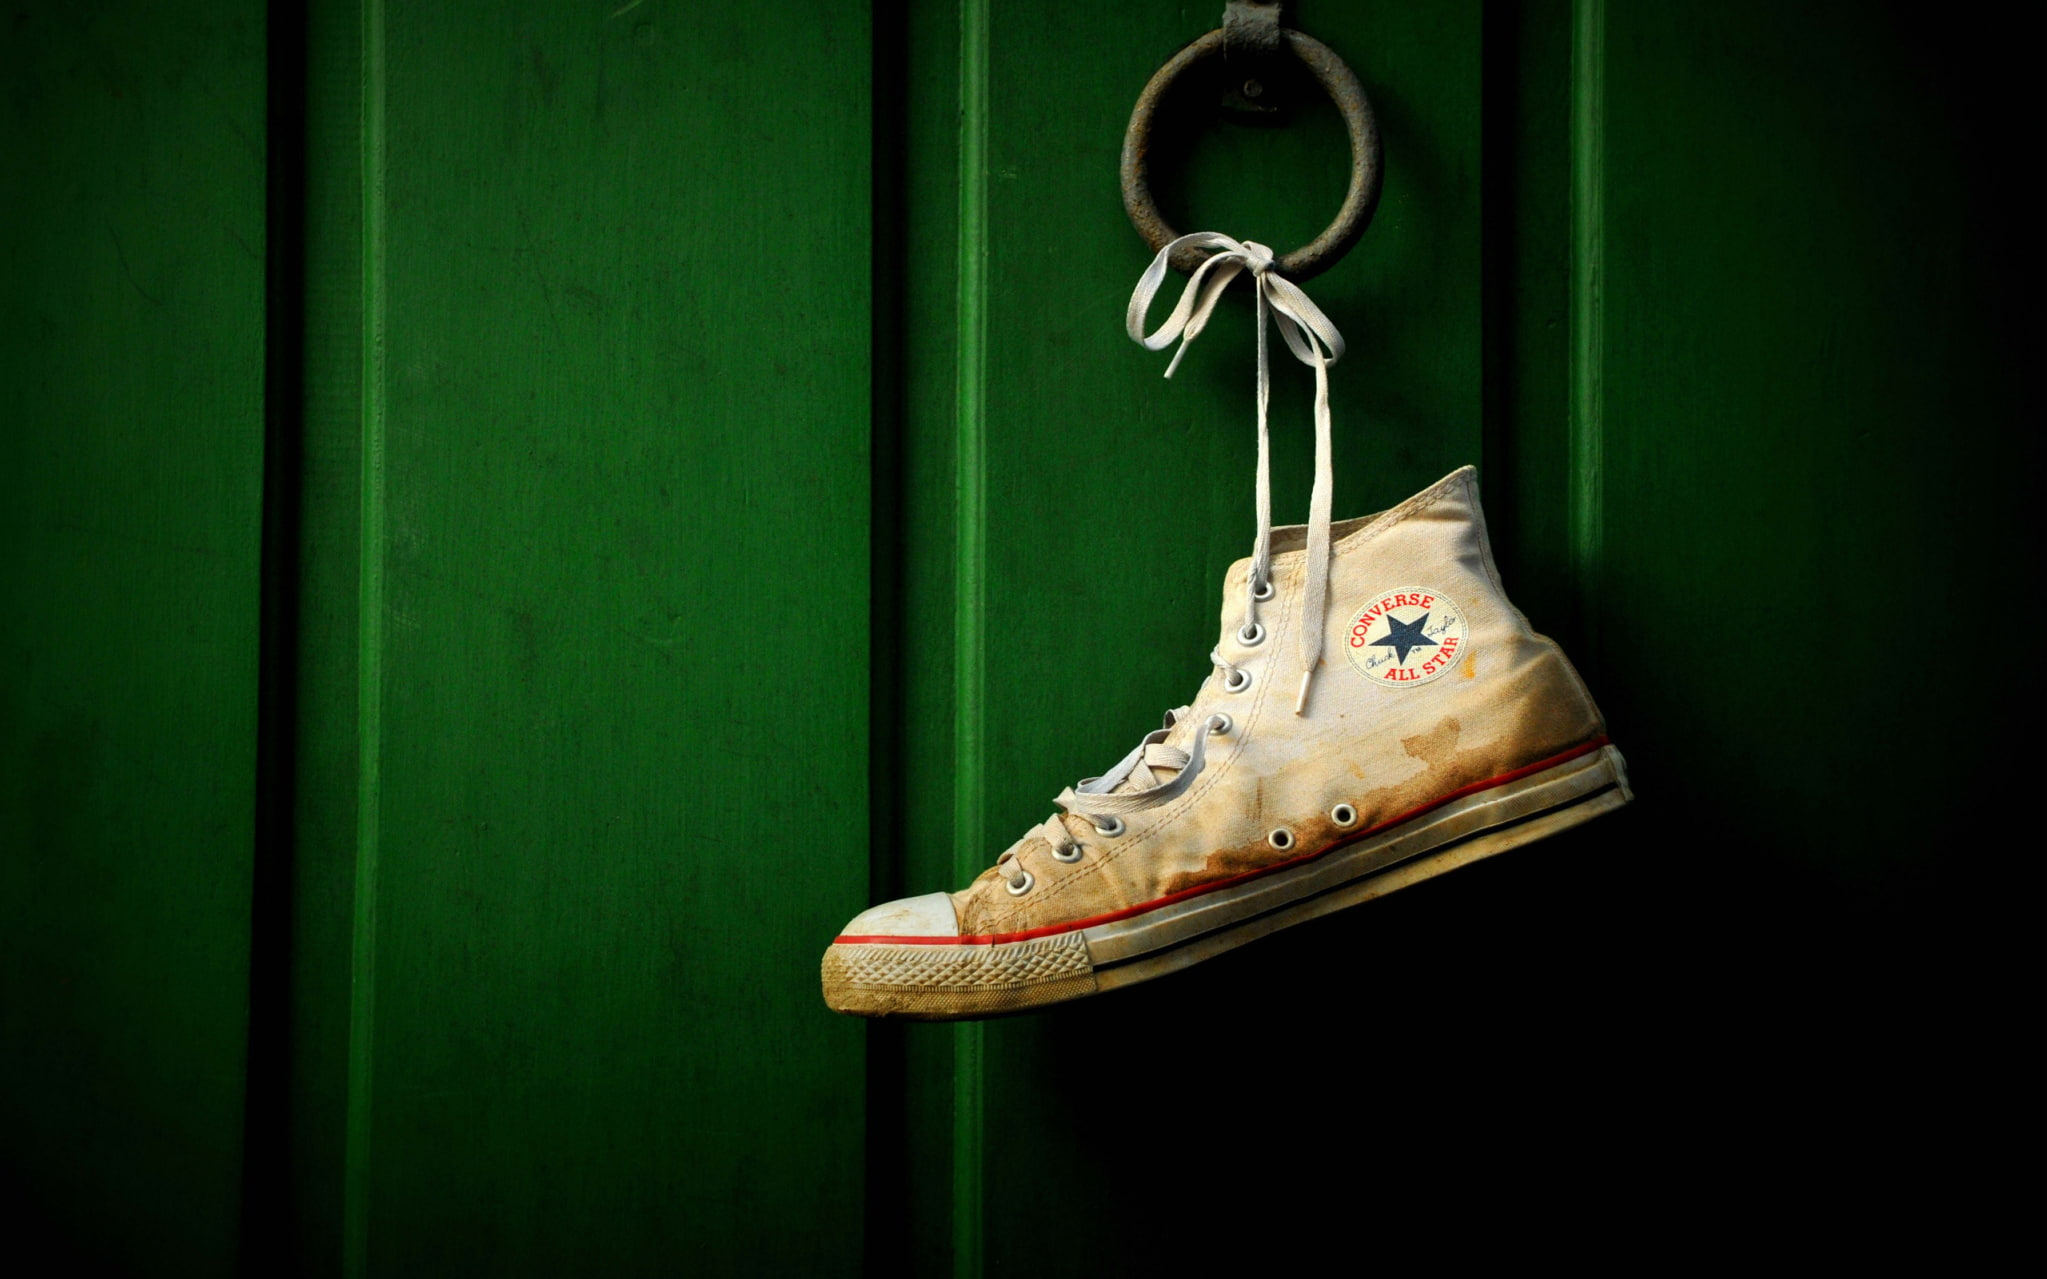 Dirty Converse Shoe wallpaper, photography